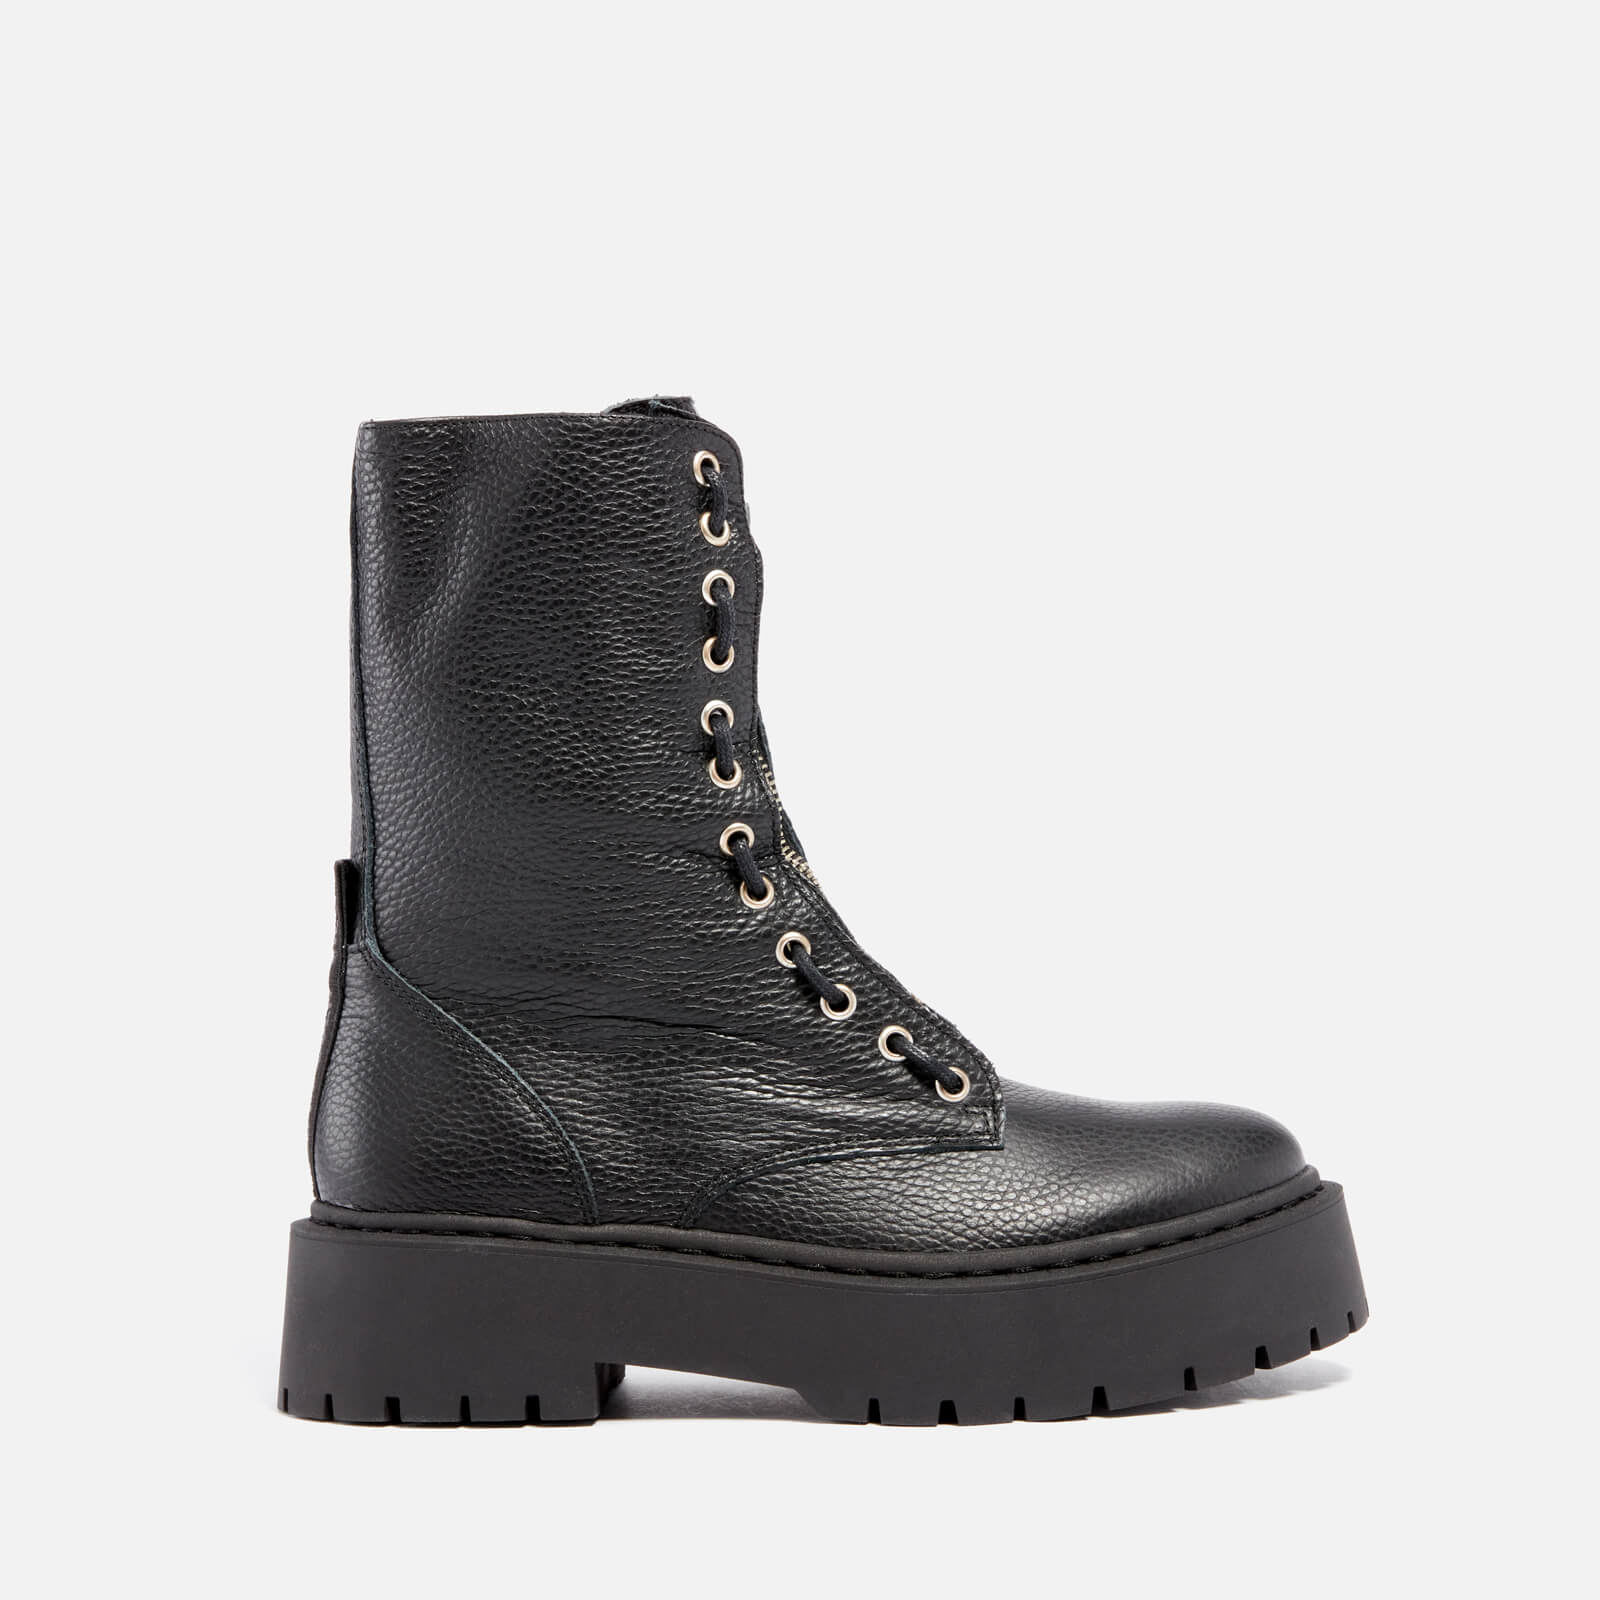 Steve Madden Women's Odilia Leather Zip Front Boots - Black - UK 4